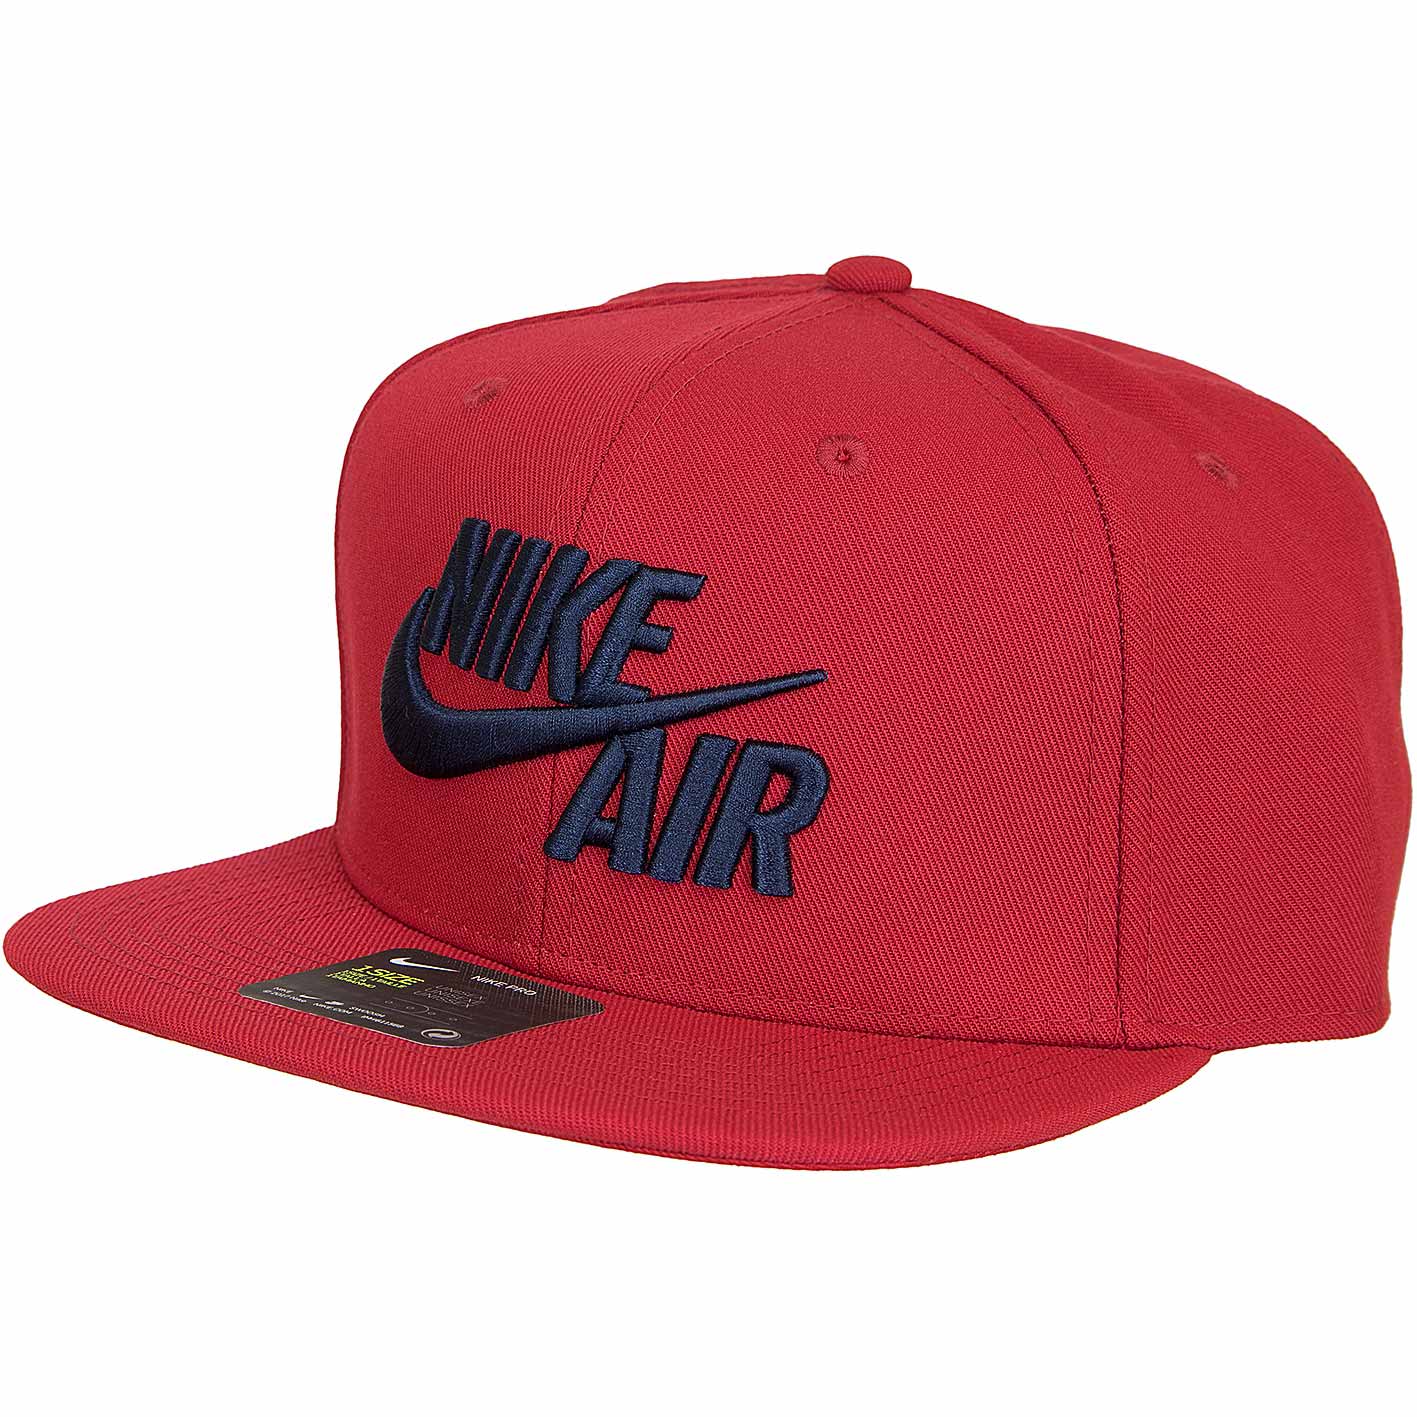 ☆ Nike Snapback Cap Air Classic Pro rot/dunkelblau - hier bestellen!